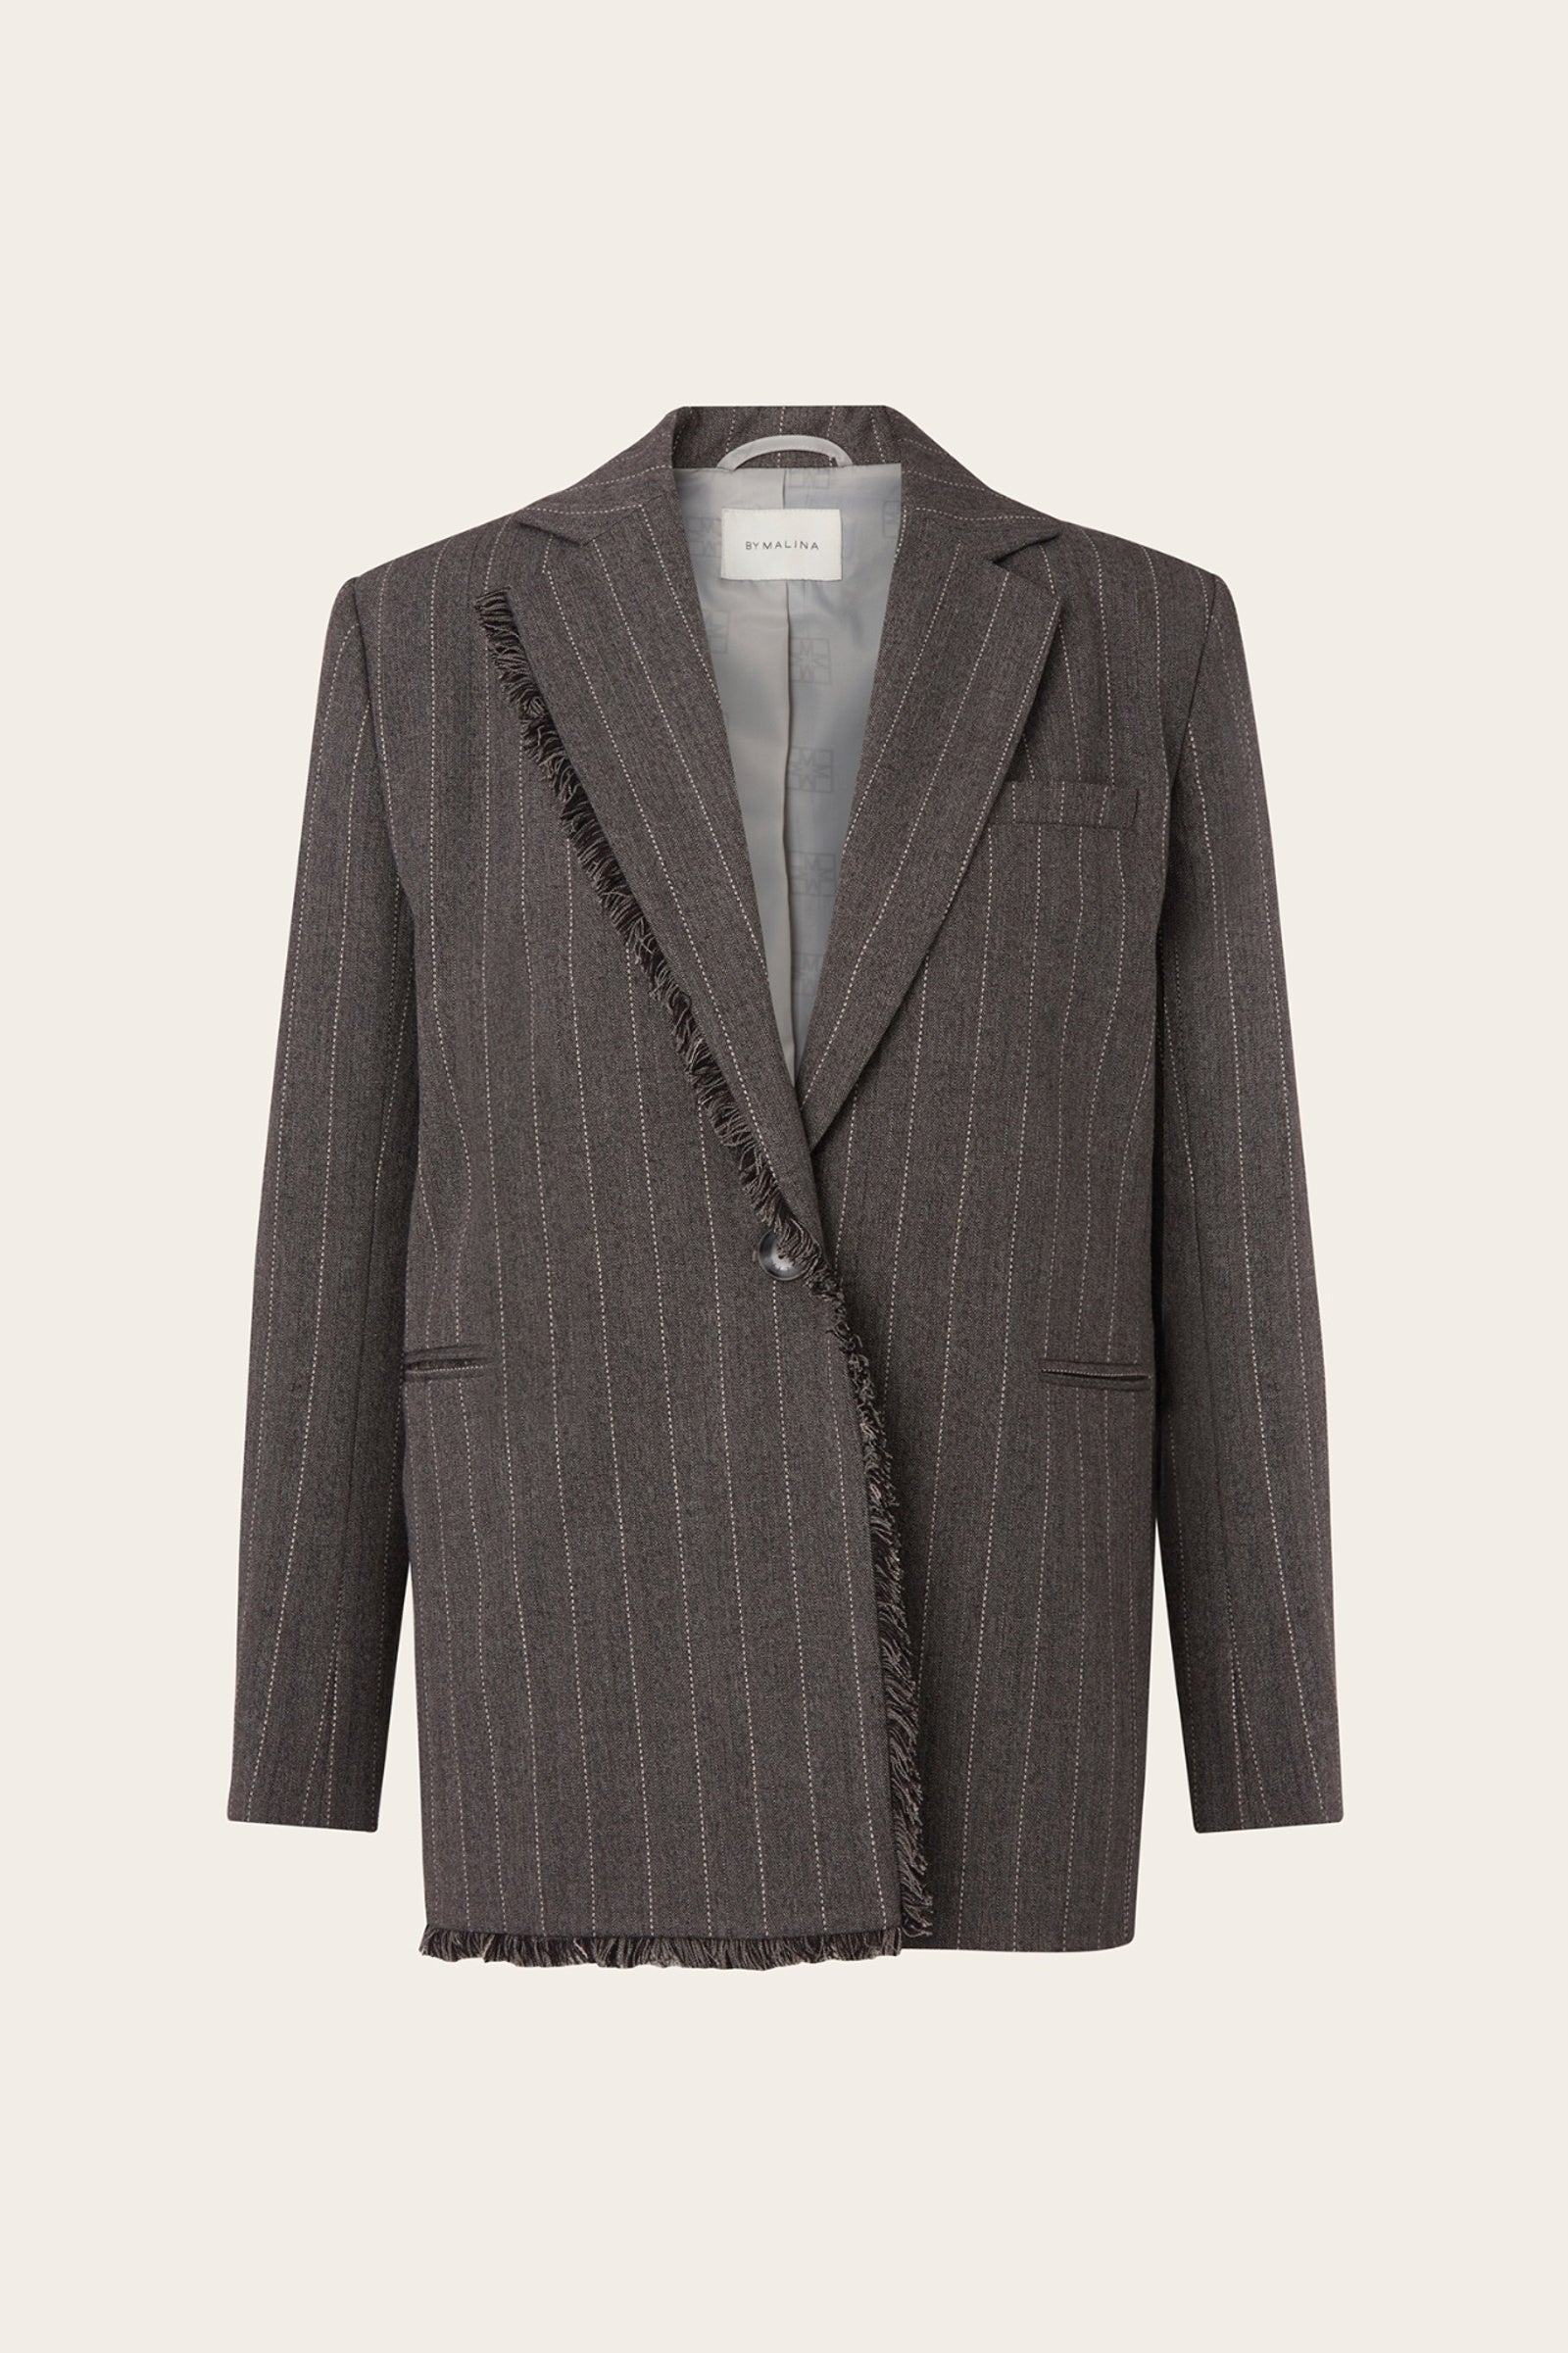 Grey single breasted pinstripe blazer with fringe detail